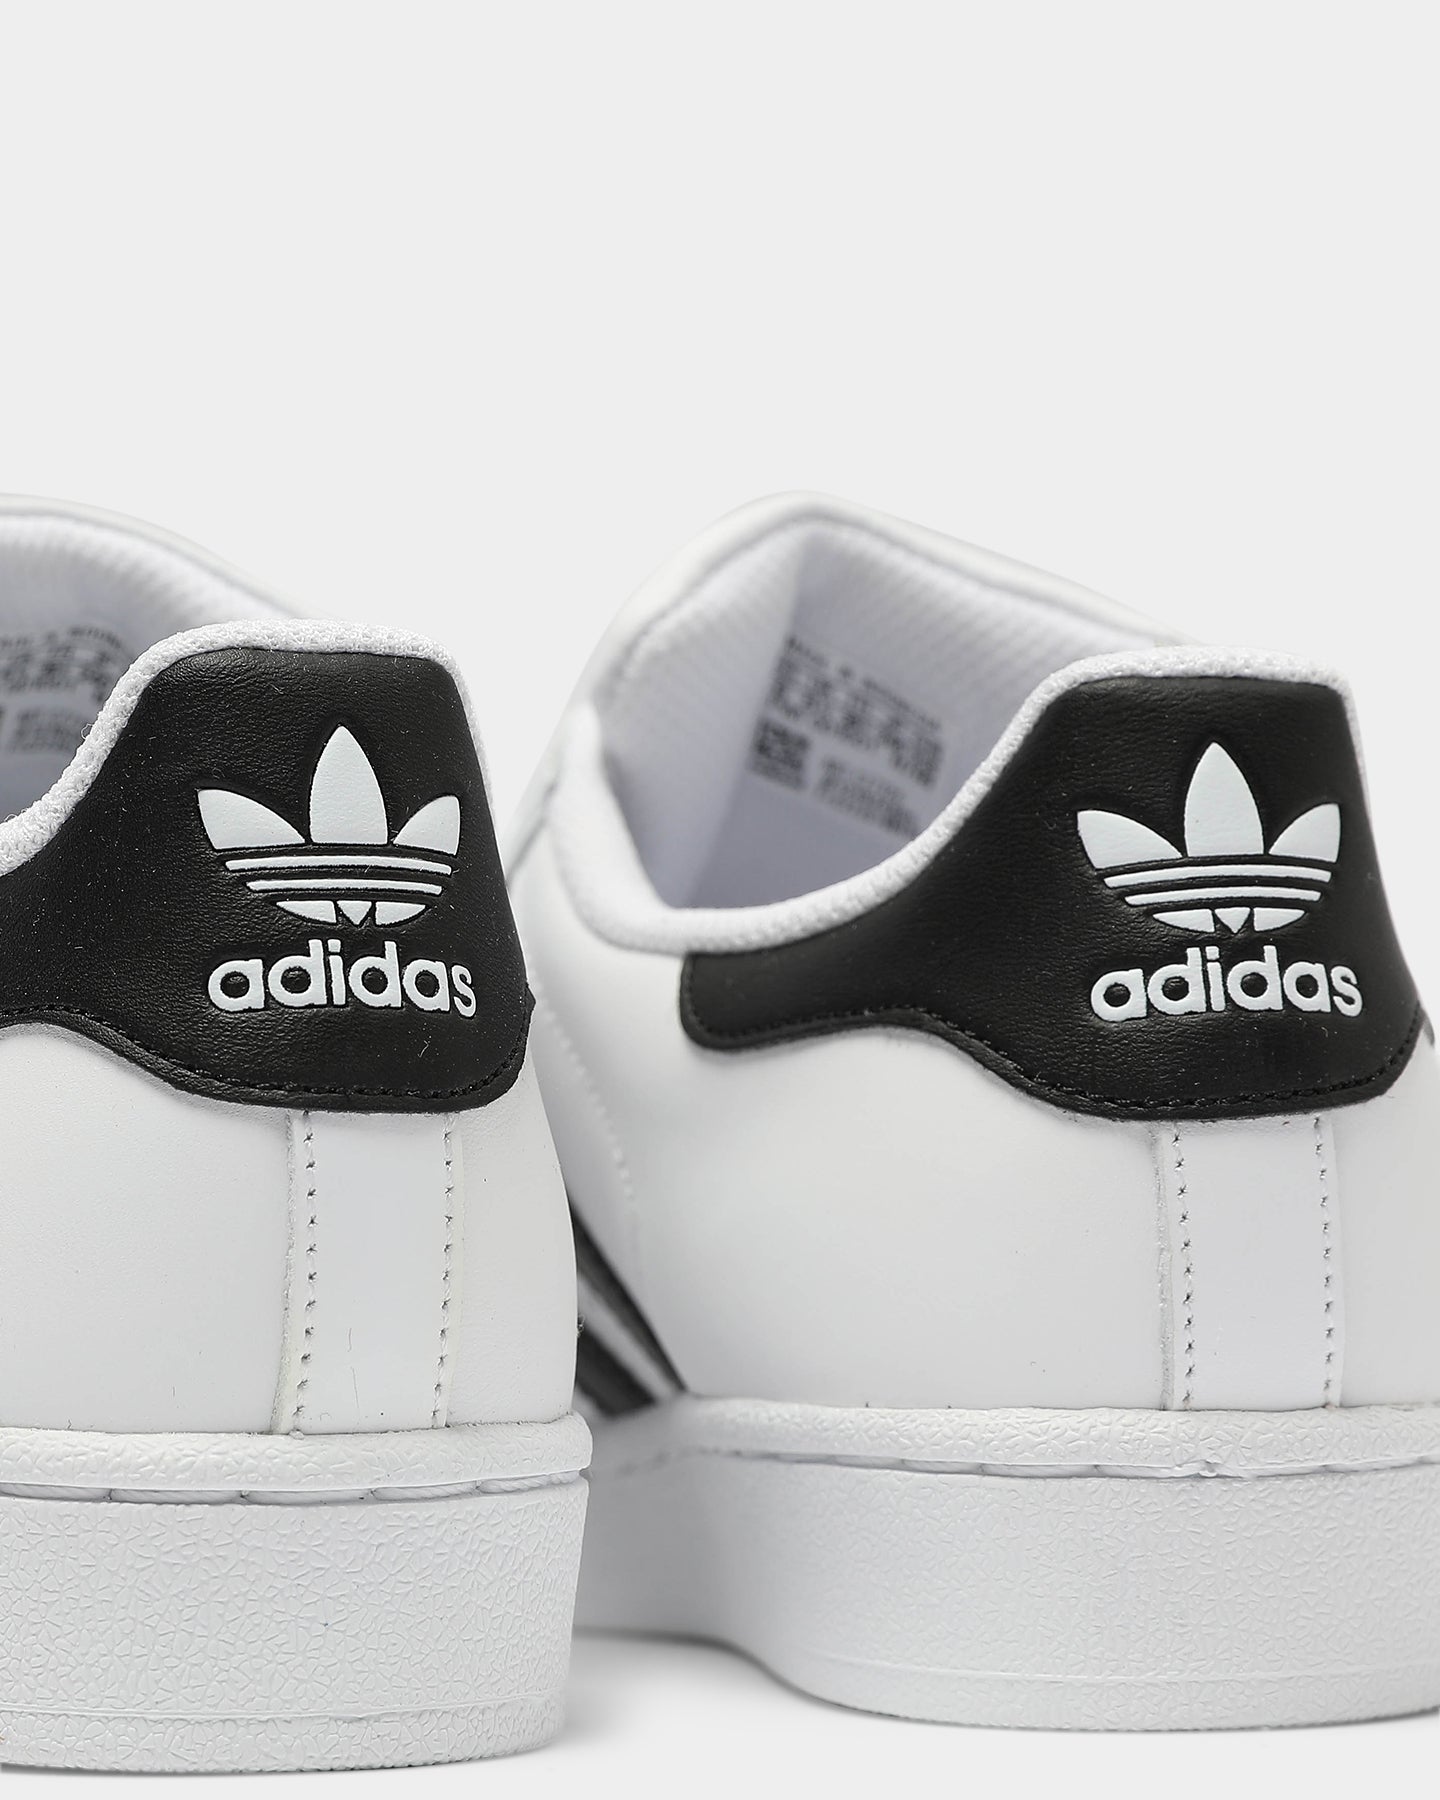 adidas original black and white sneakers